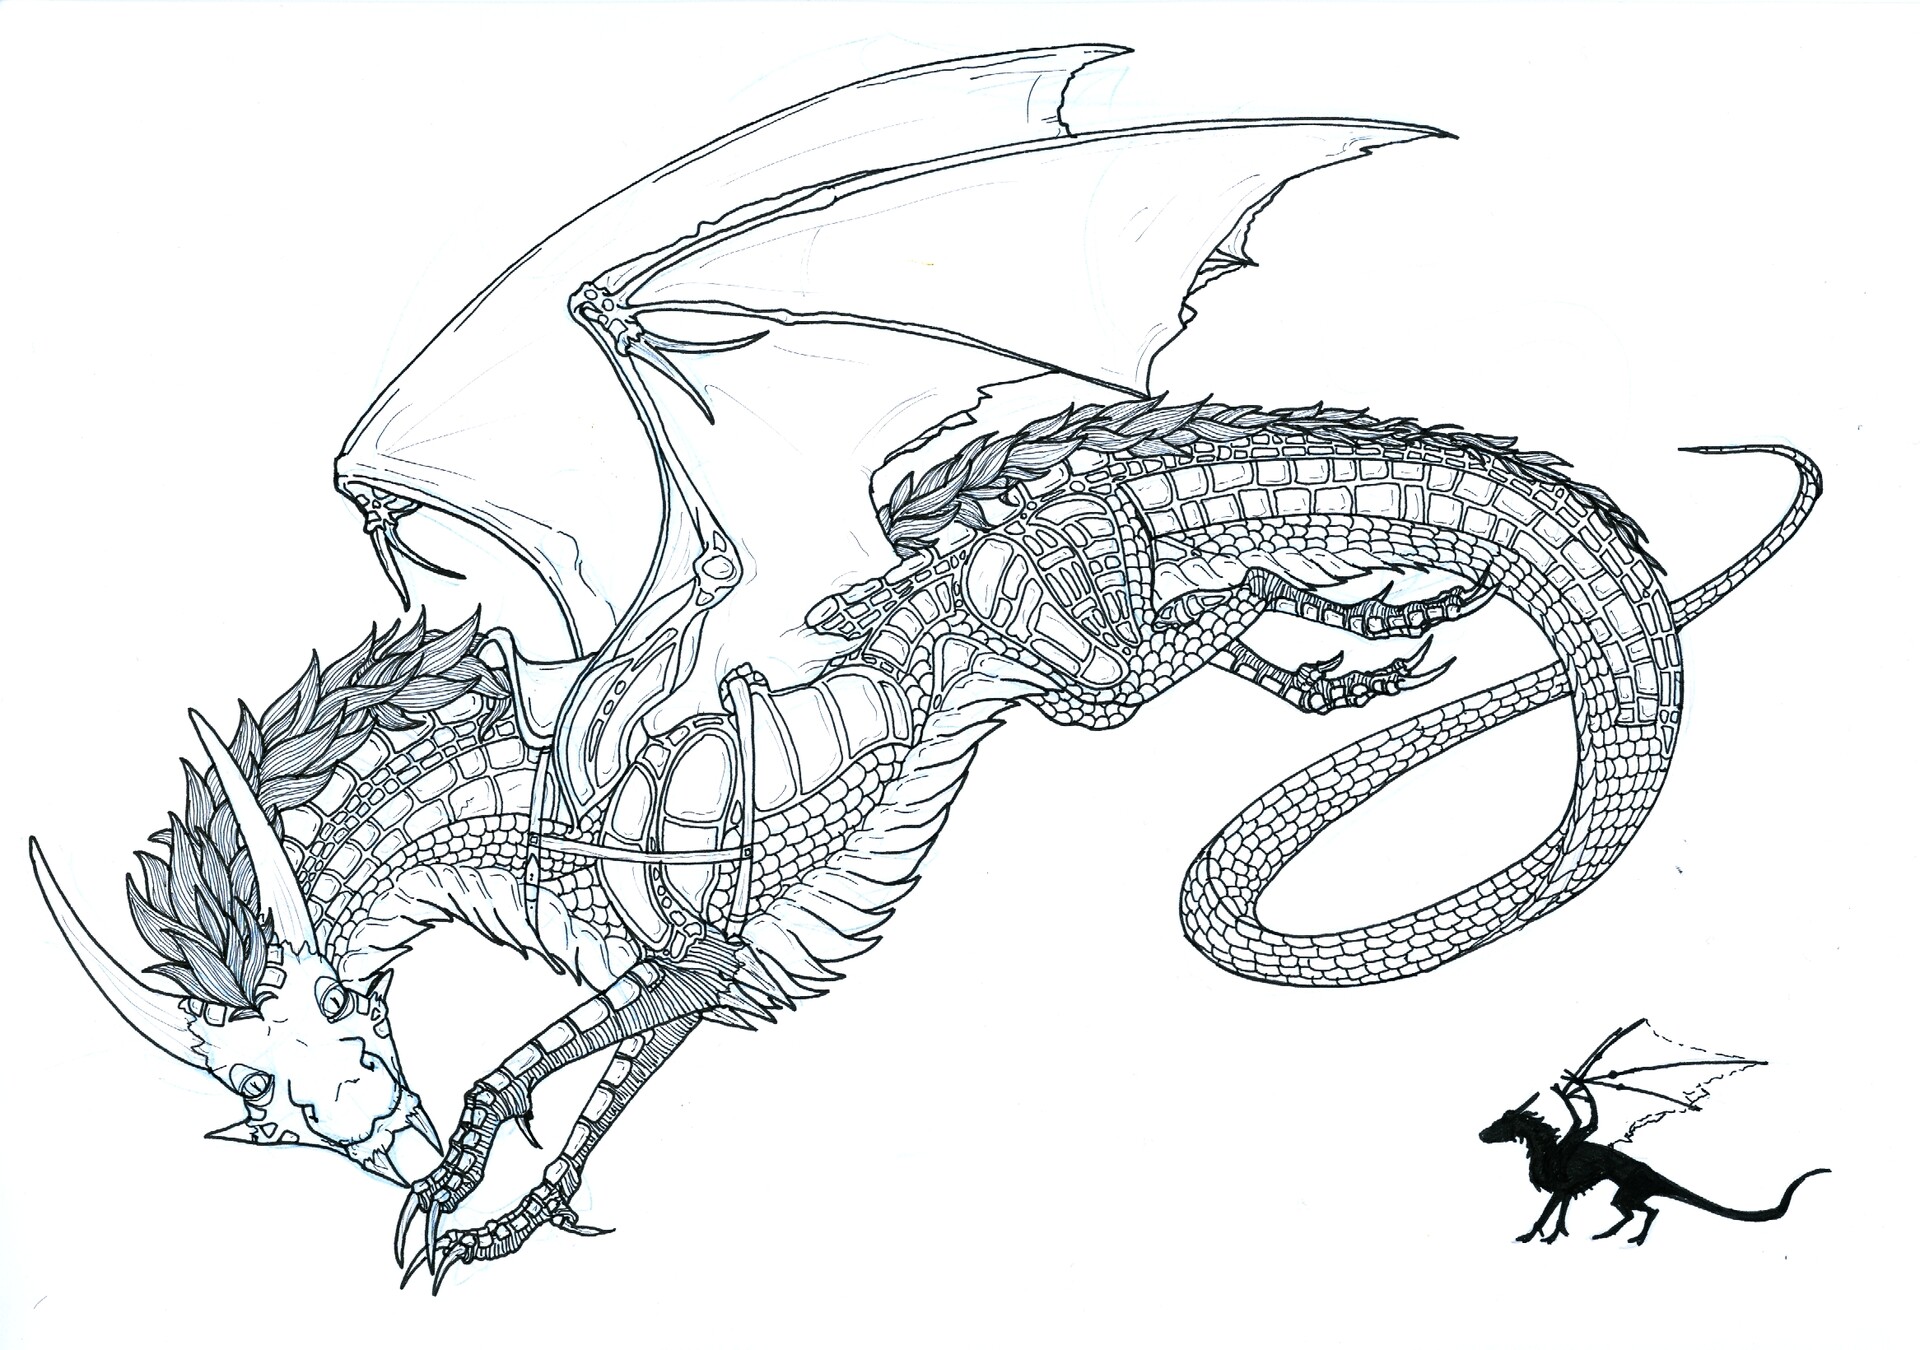 20 dragon drawings | Image